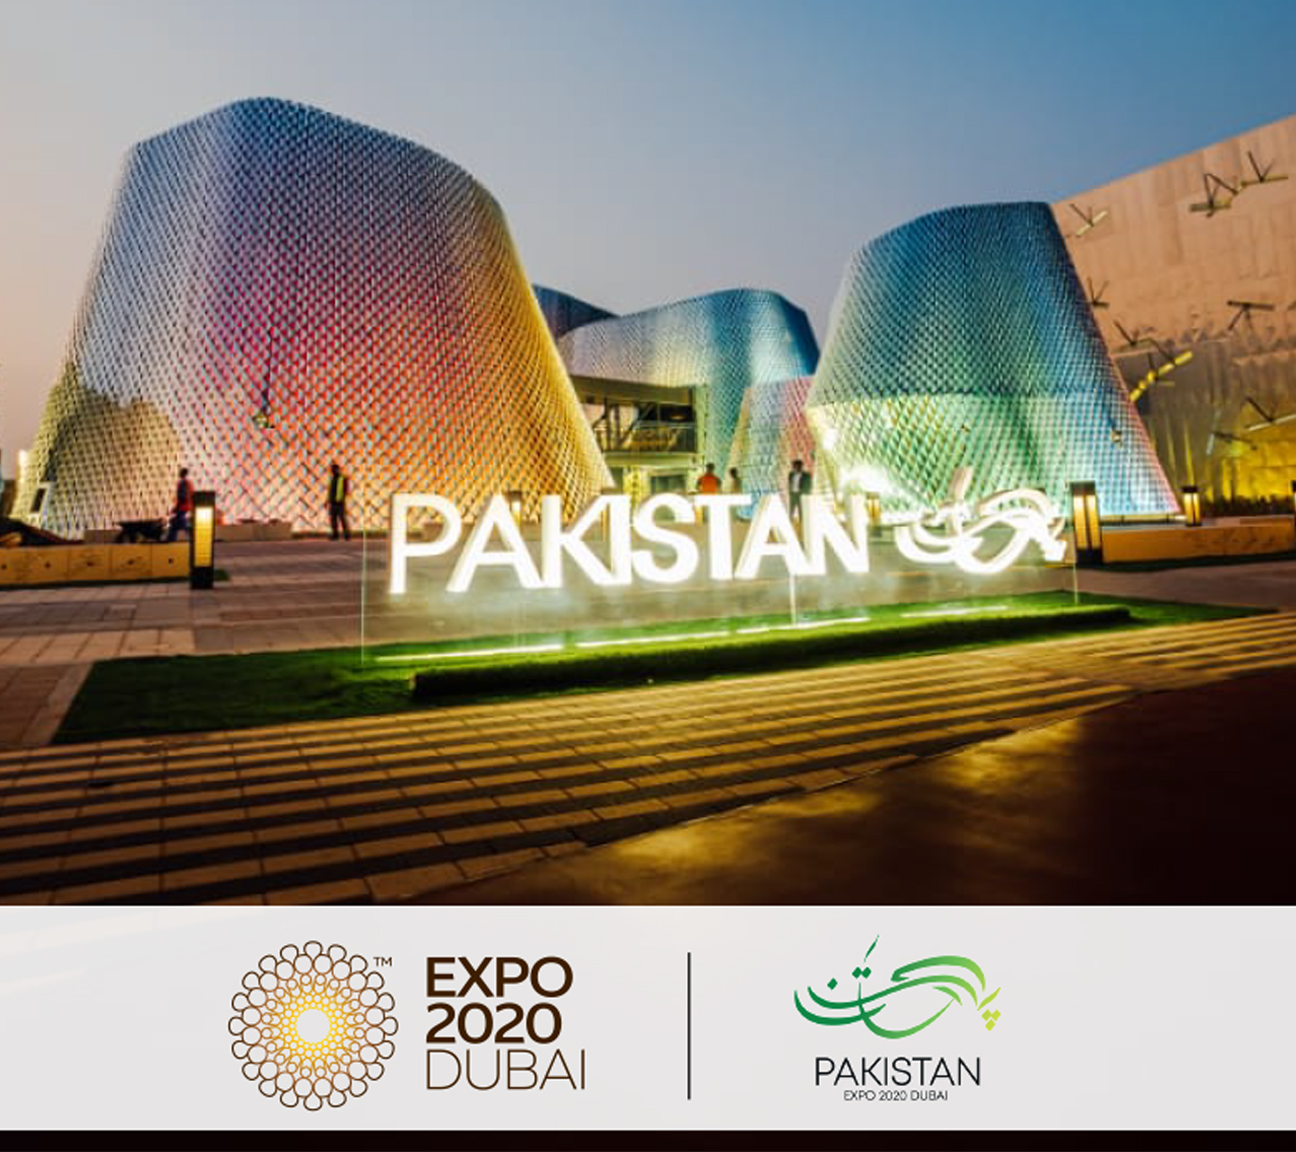 PROUD TO SPONSOR PAKISTAN PAVILION AT THE EXPO 2020 DUBAI